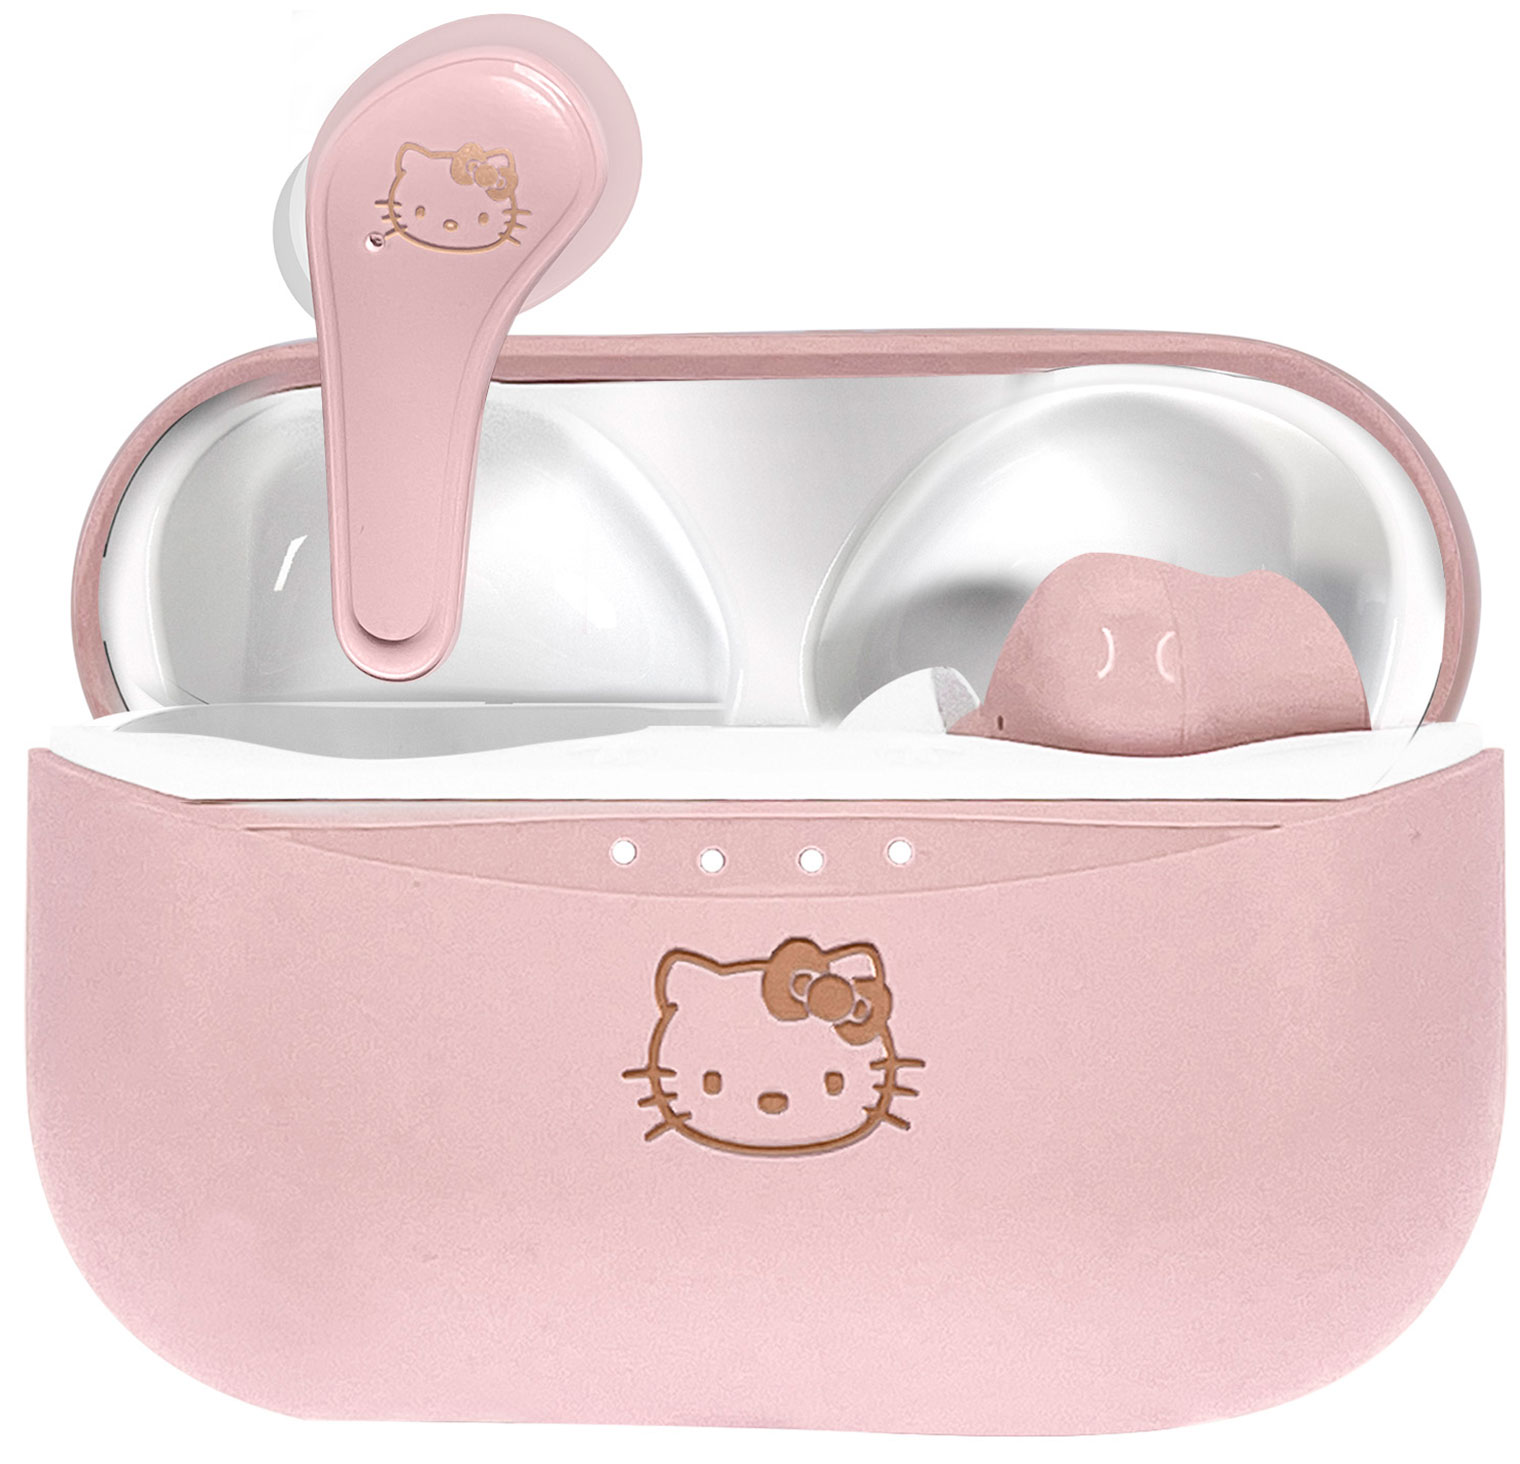 Беспроводные наушники Otl Technologies Hello Kitty (41000010679)